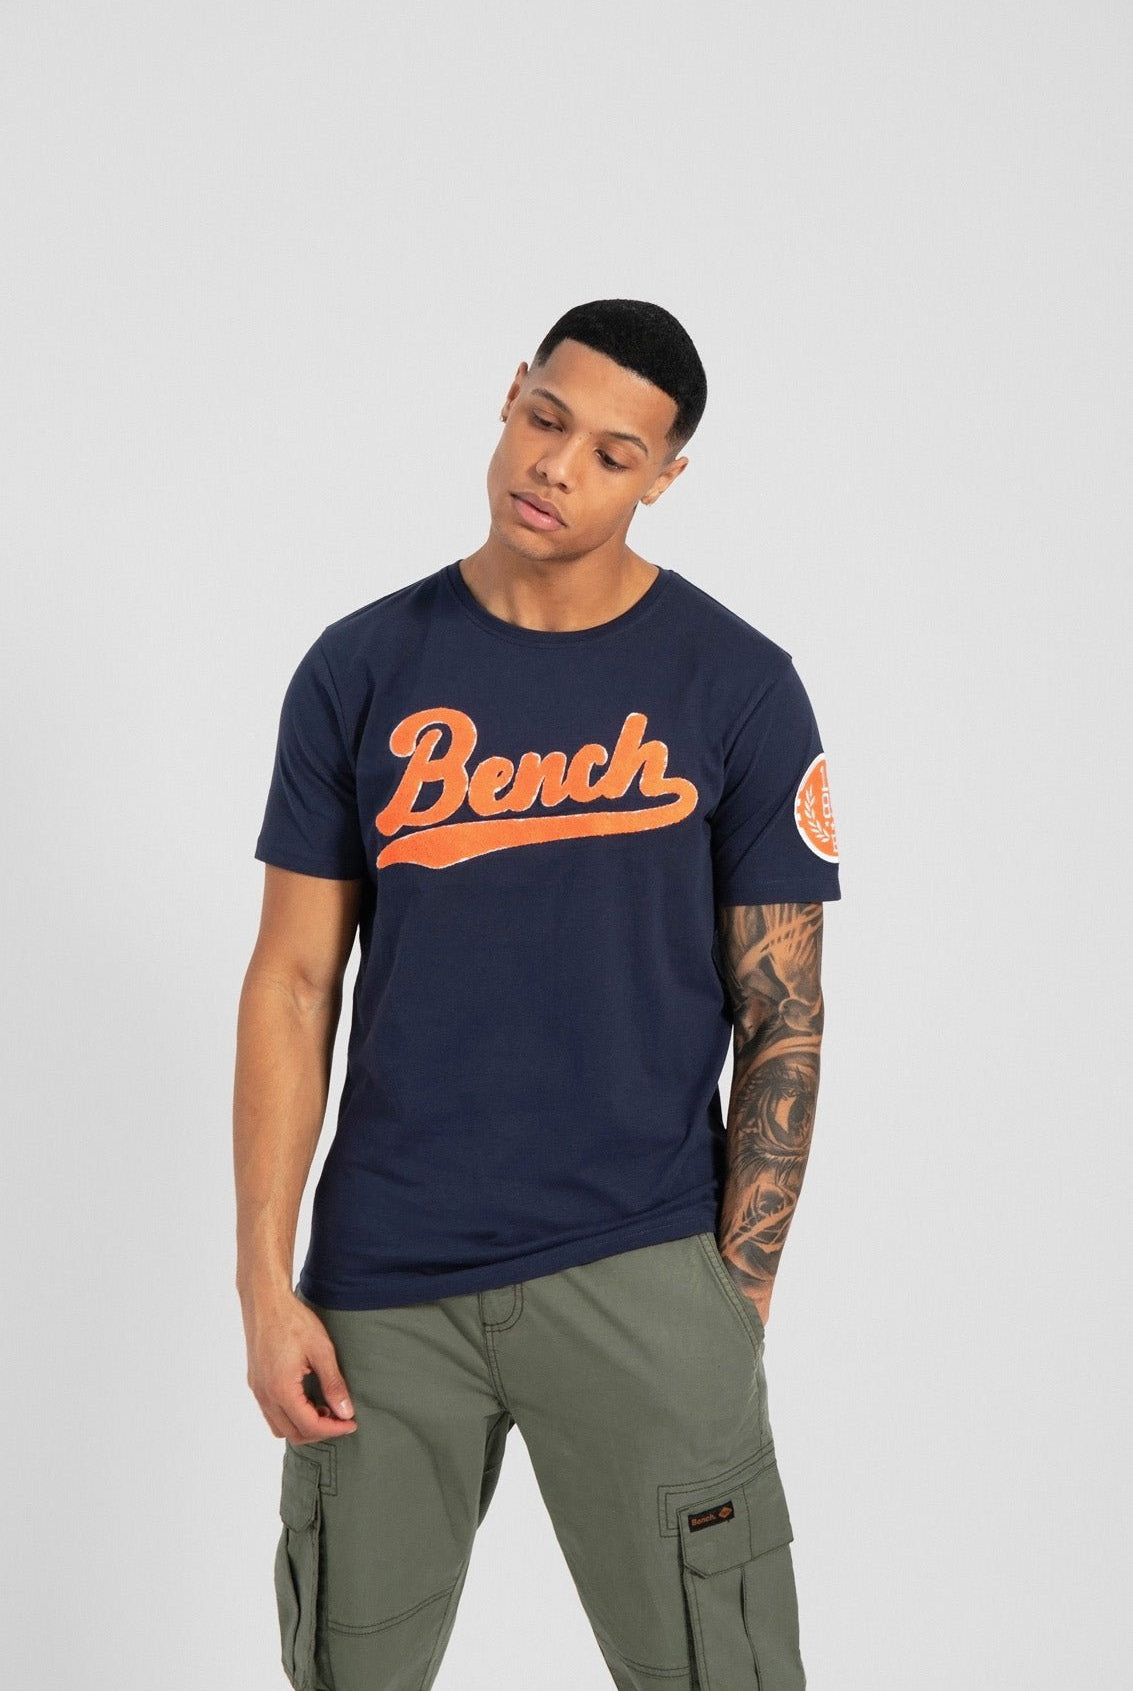 Mens 'ENAM' T-Shirt - NAVY - Shop at www.Bench.co.uk #LoveMyHood